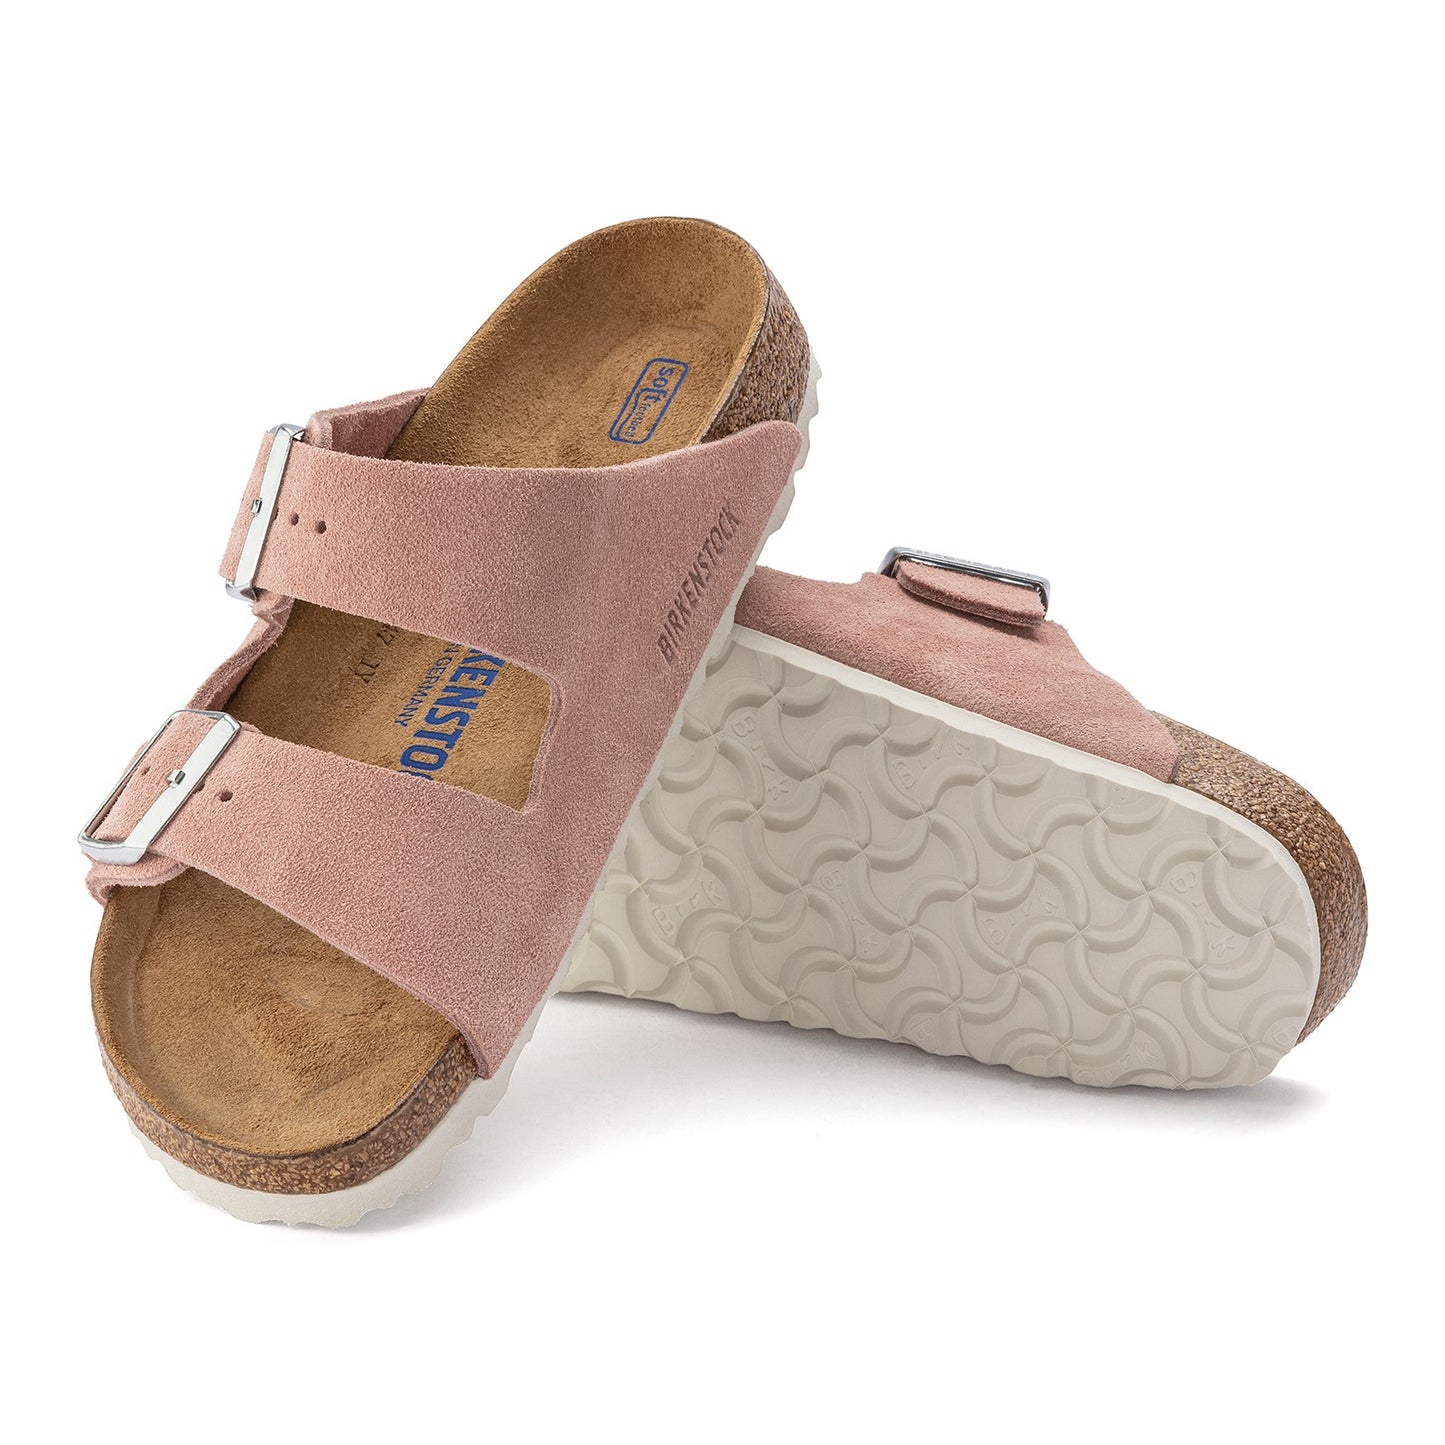 Peltz Shoes  Women's Birkenstock Arizona Soft Footbed Sandal - Narrow Width PINK CLAY 1023 321 N